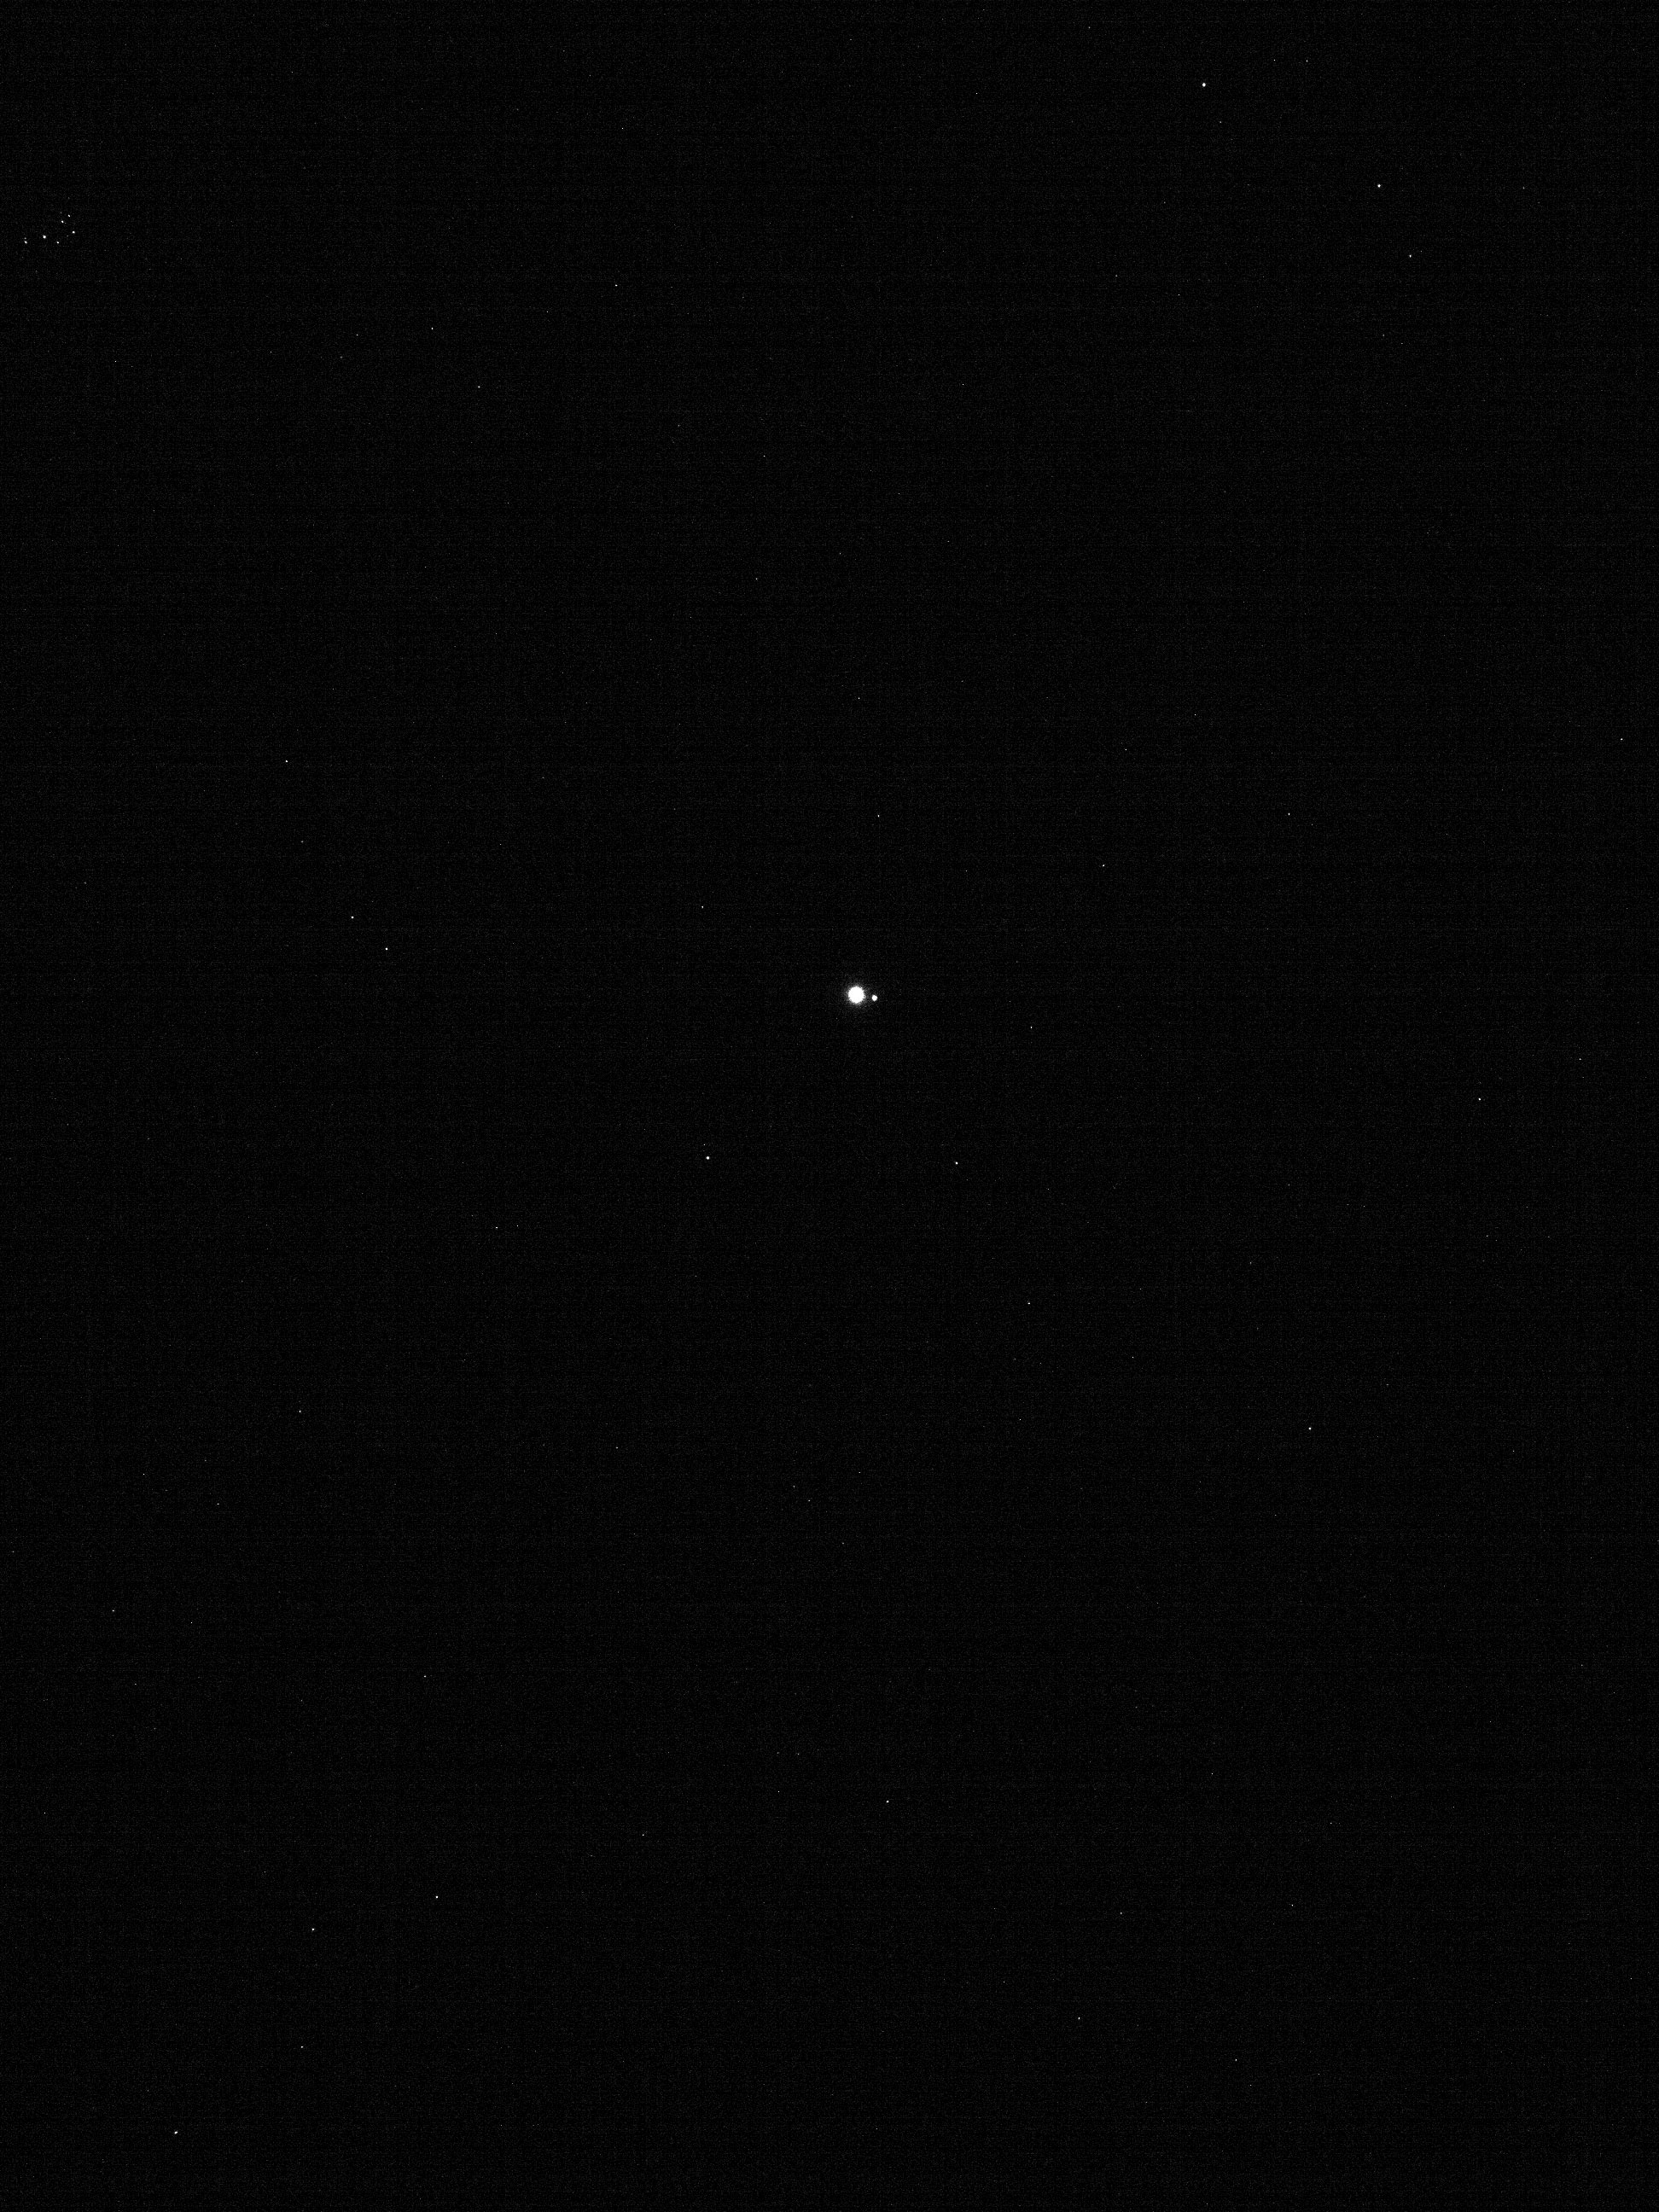 The Earth and Moon, seen by the OSIRIS-REX spacecraft fropm over 60 million km away. Credit: NASA/Goddard/University of Arizona/Lockheed Martin